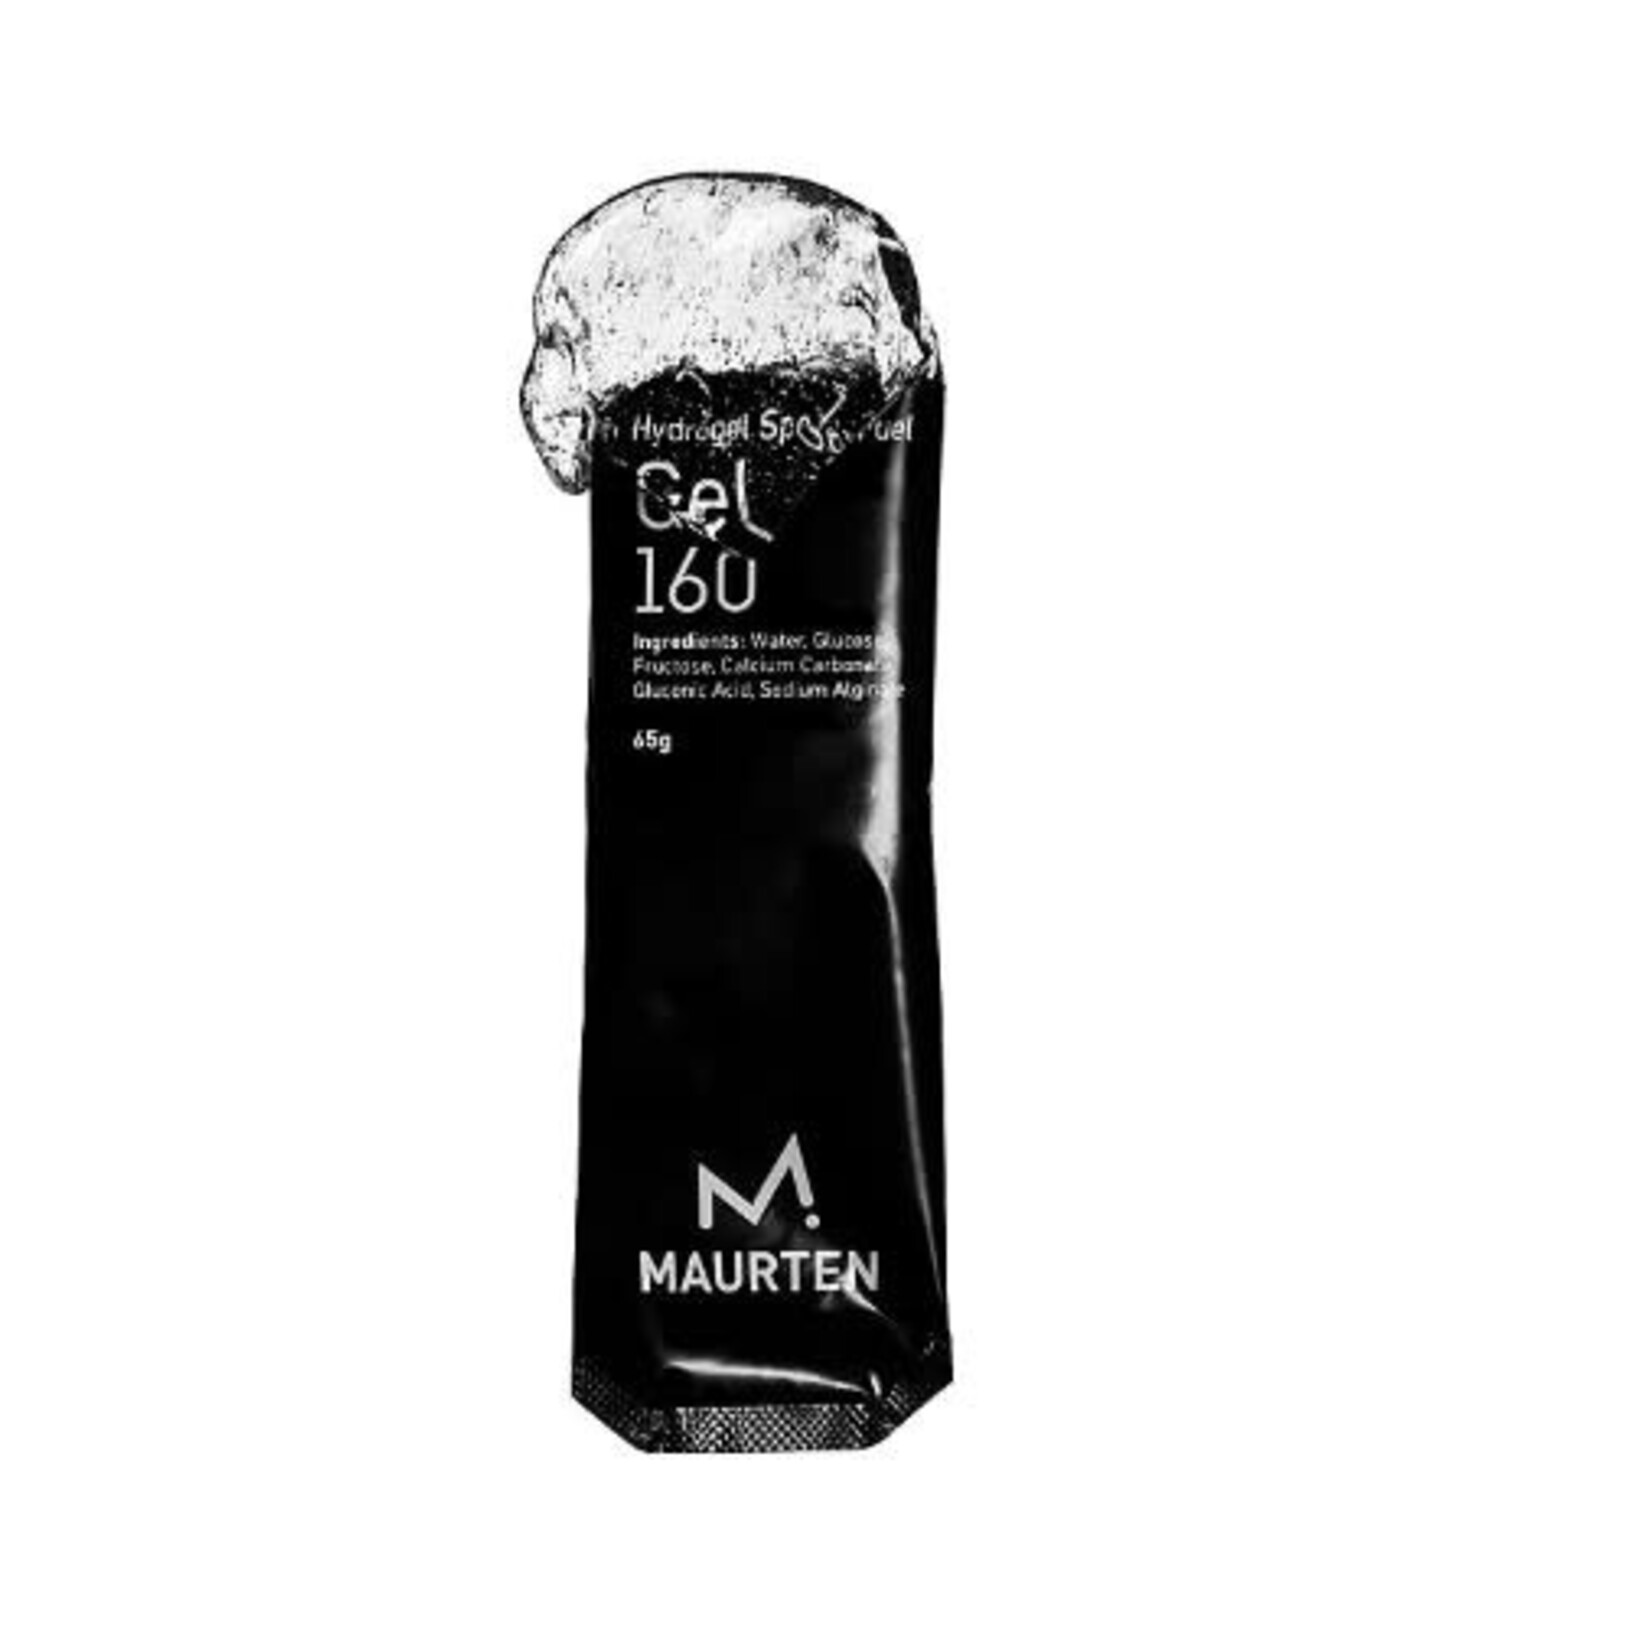 Maurten Gel 160, Box of 10